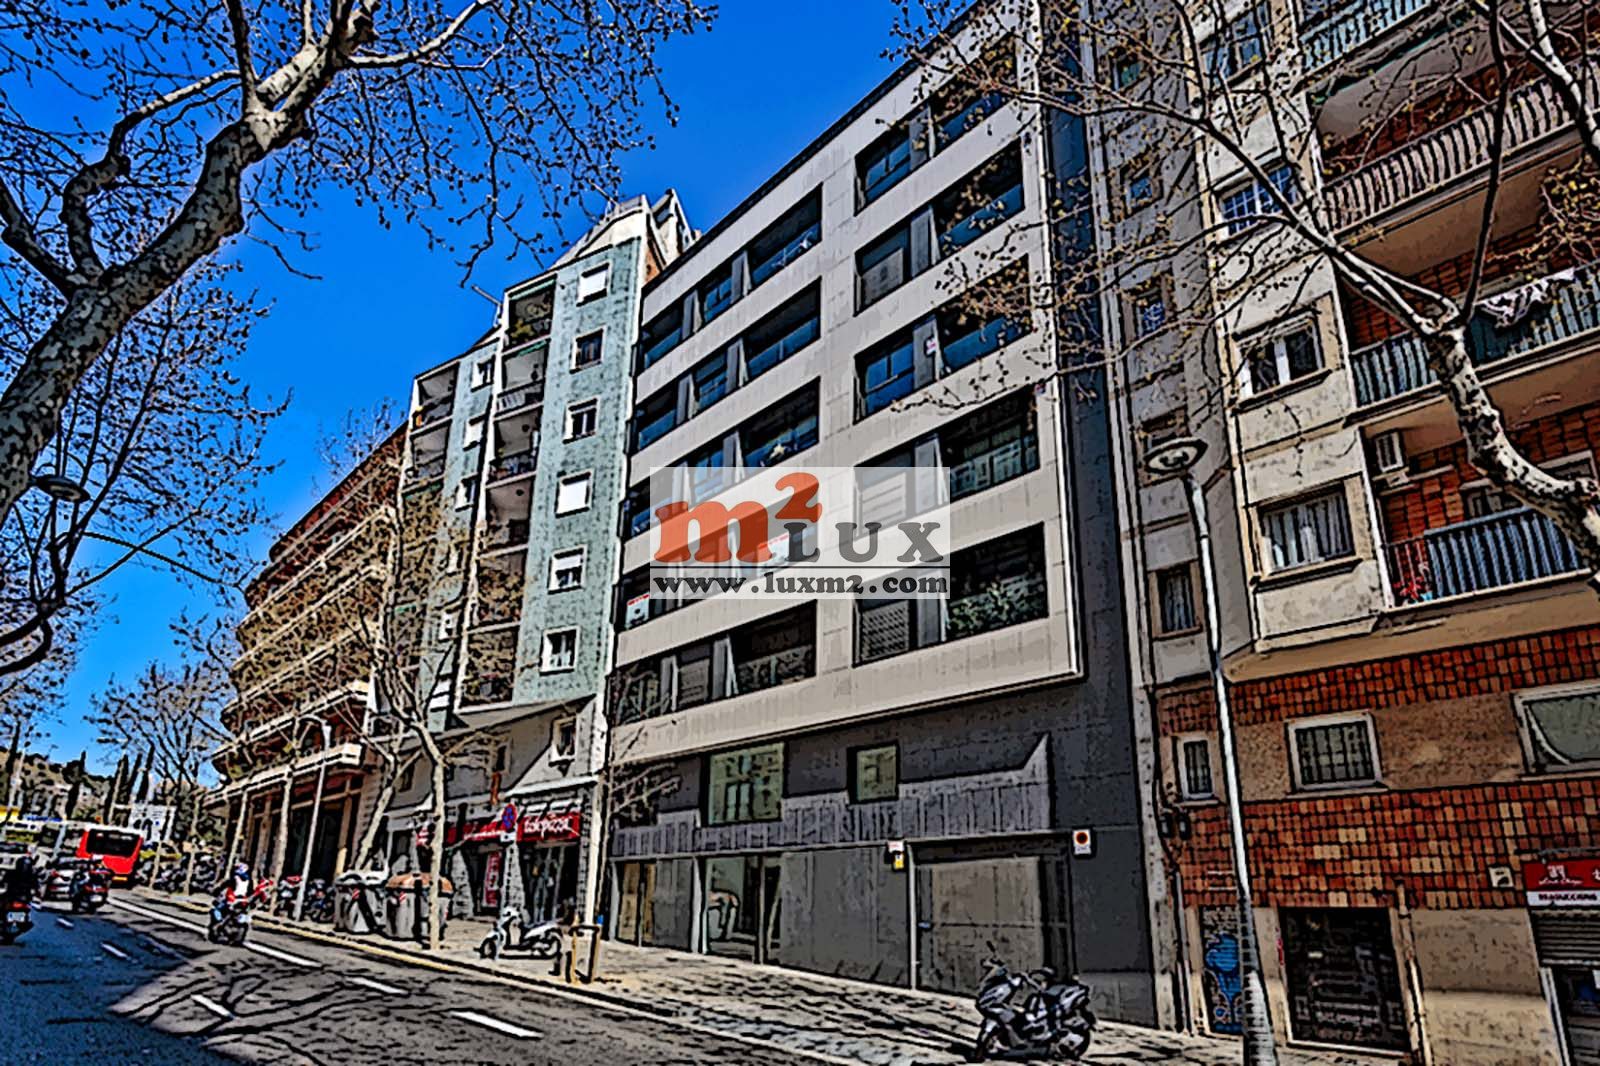 interior periscopio Transeúnte M2 Lux - Long term rental - 2 bedroom apartment in Gracia, Barcelona.